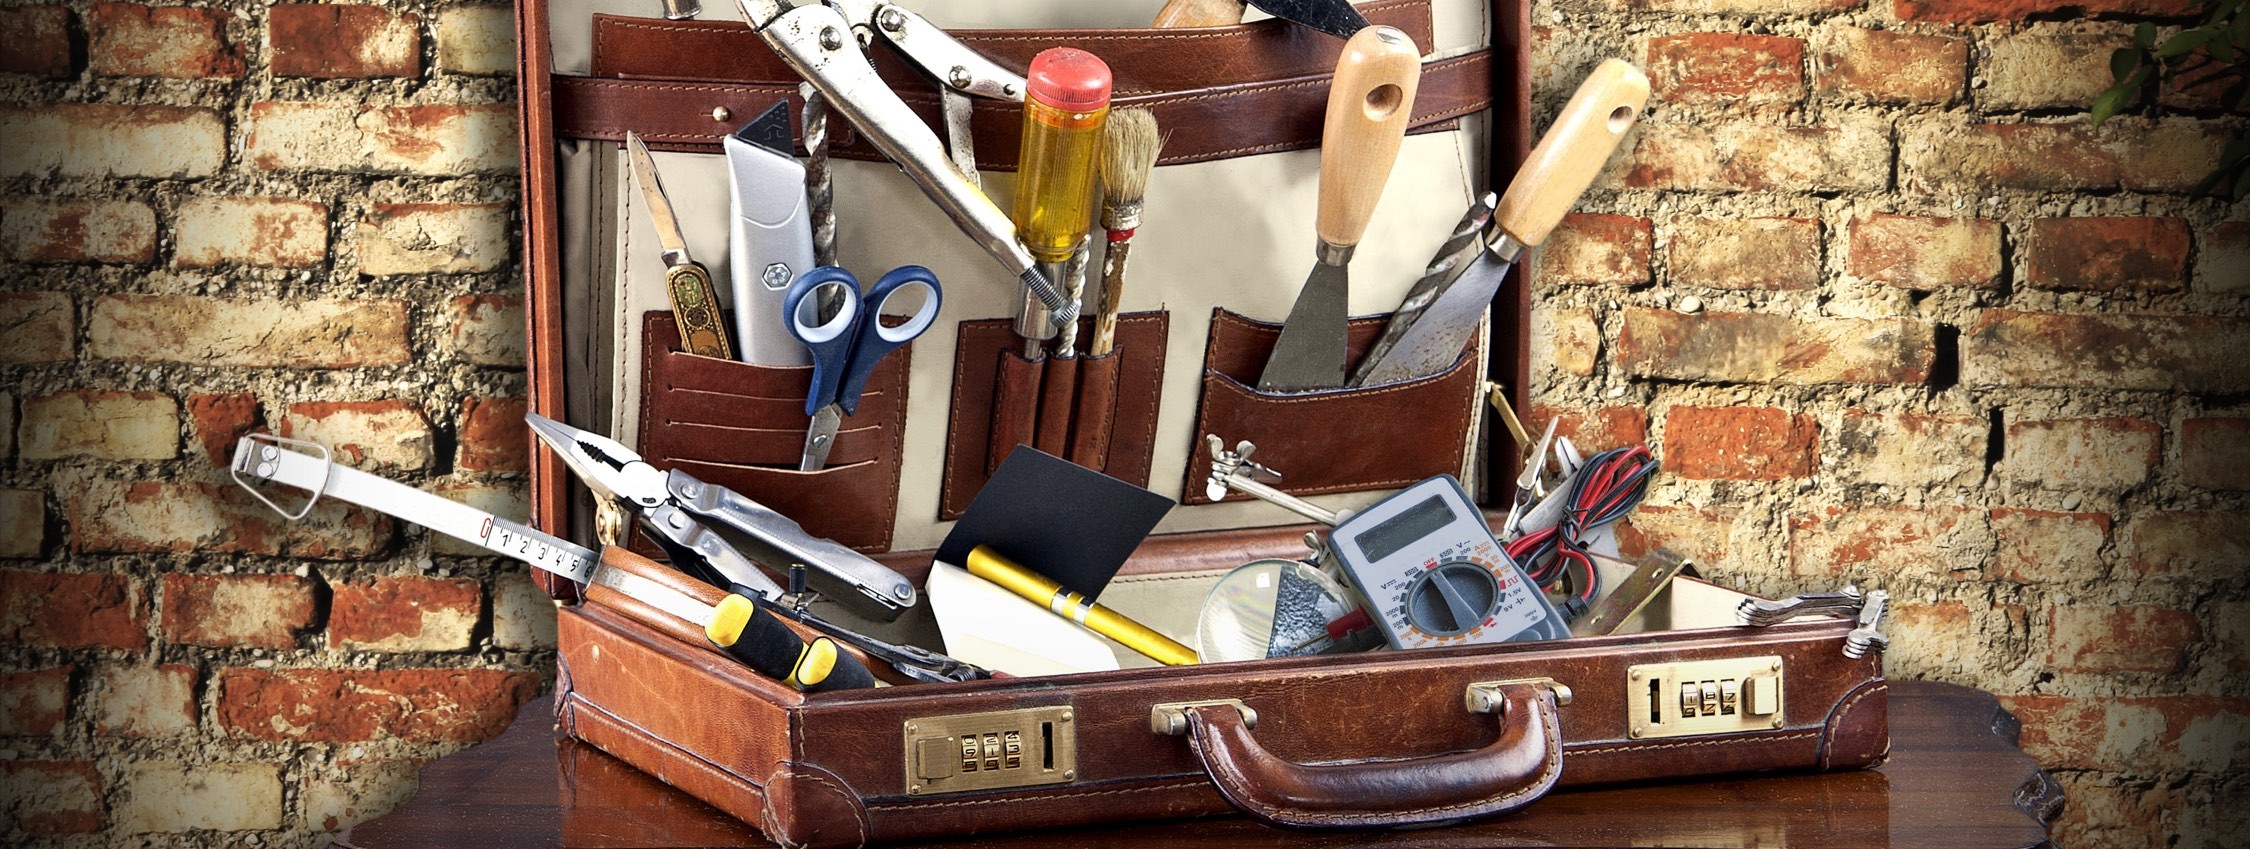 Maintenance tool briefcase image